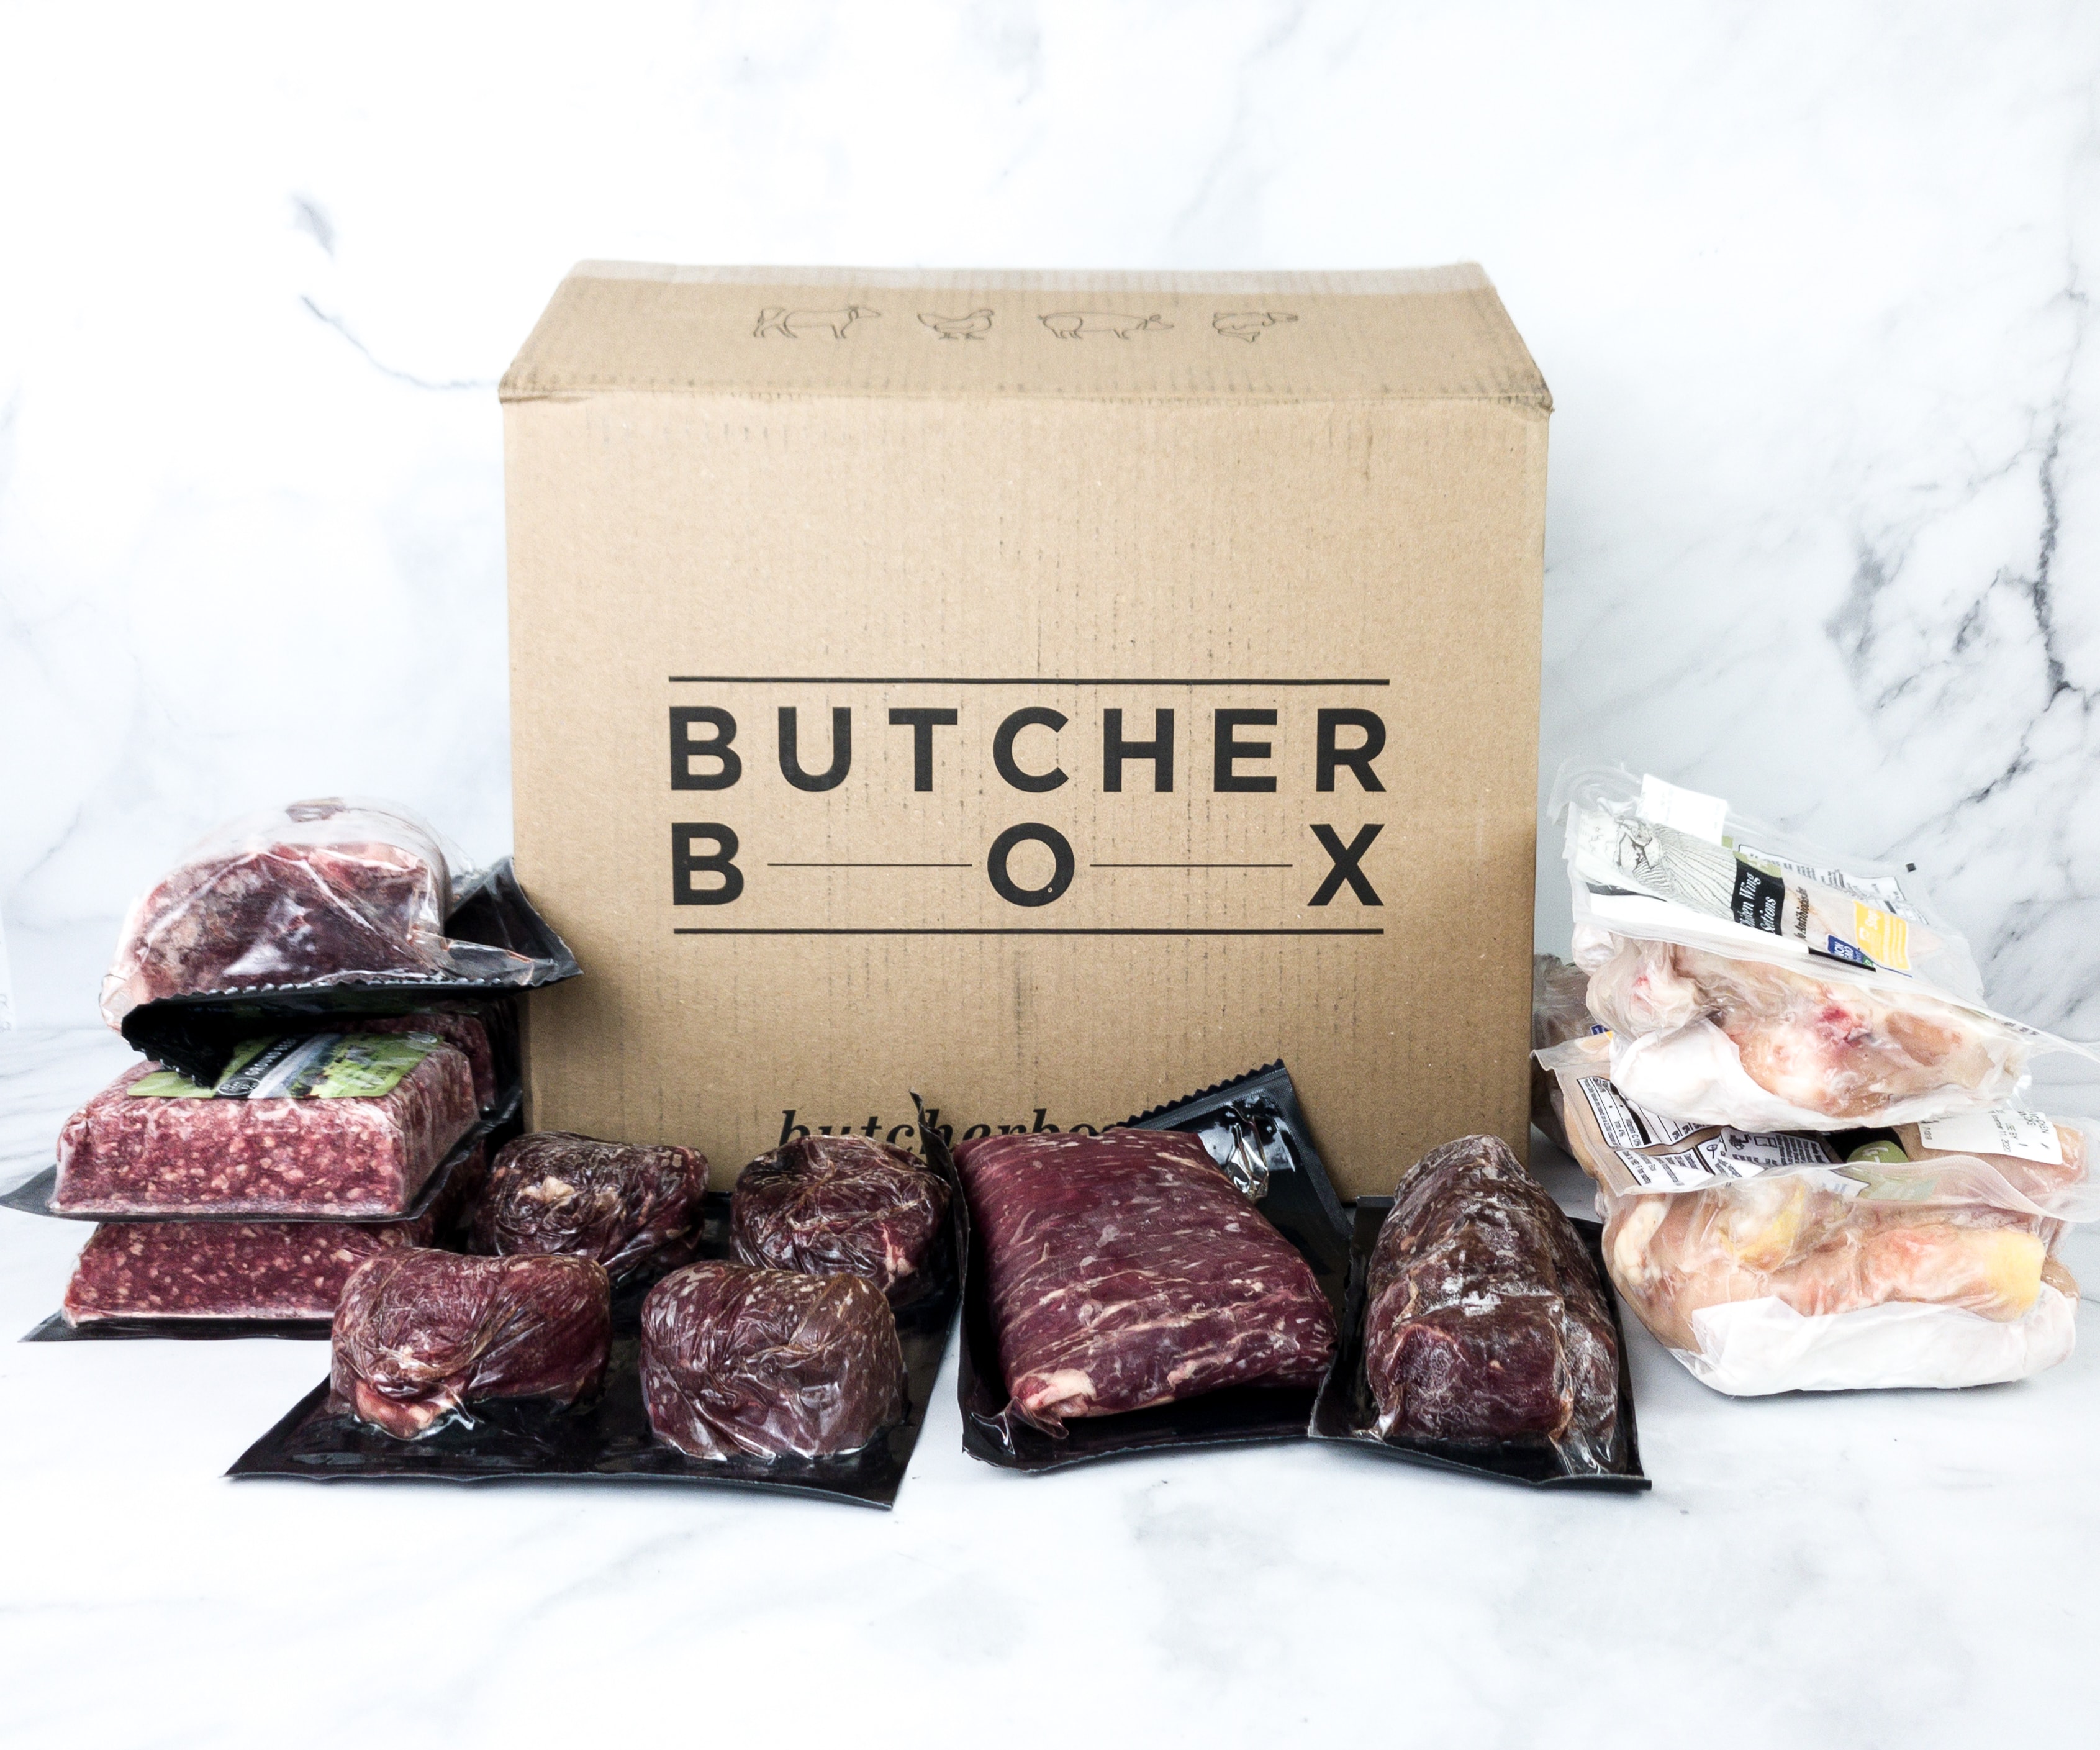 Butcher Box Feburary 2020 Subscription Box Review + Coupon - BEEF BOX ...